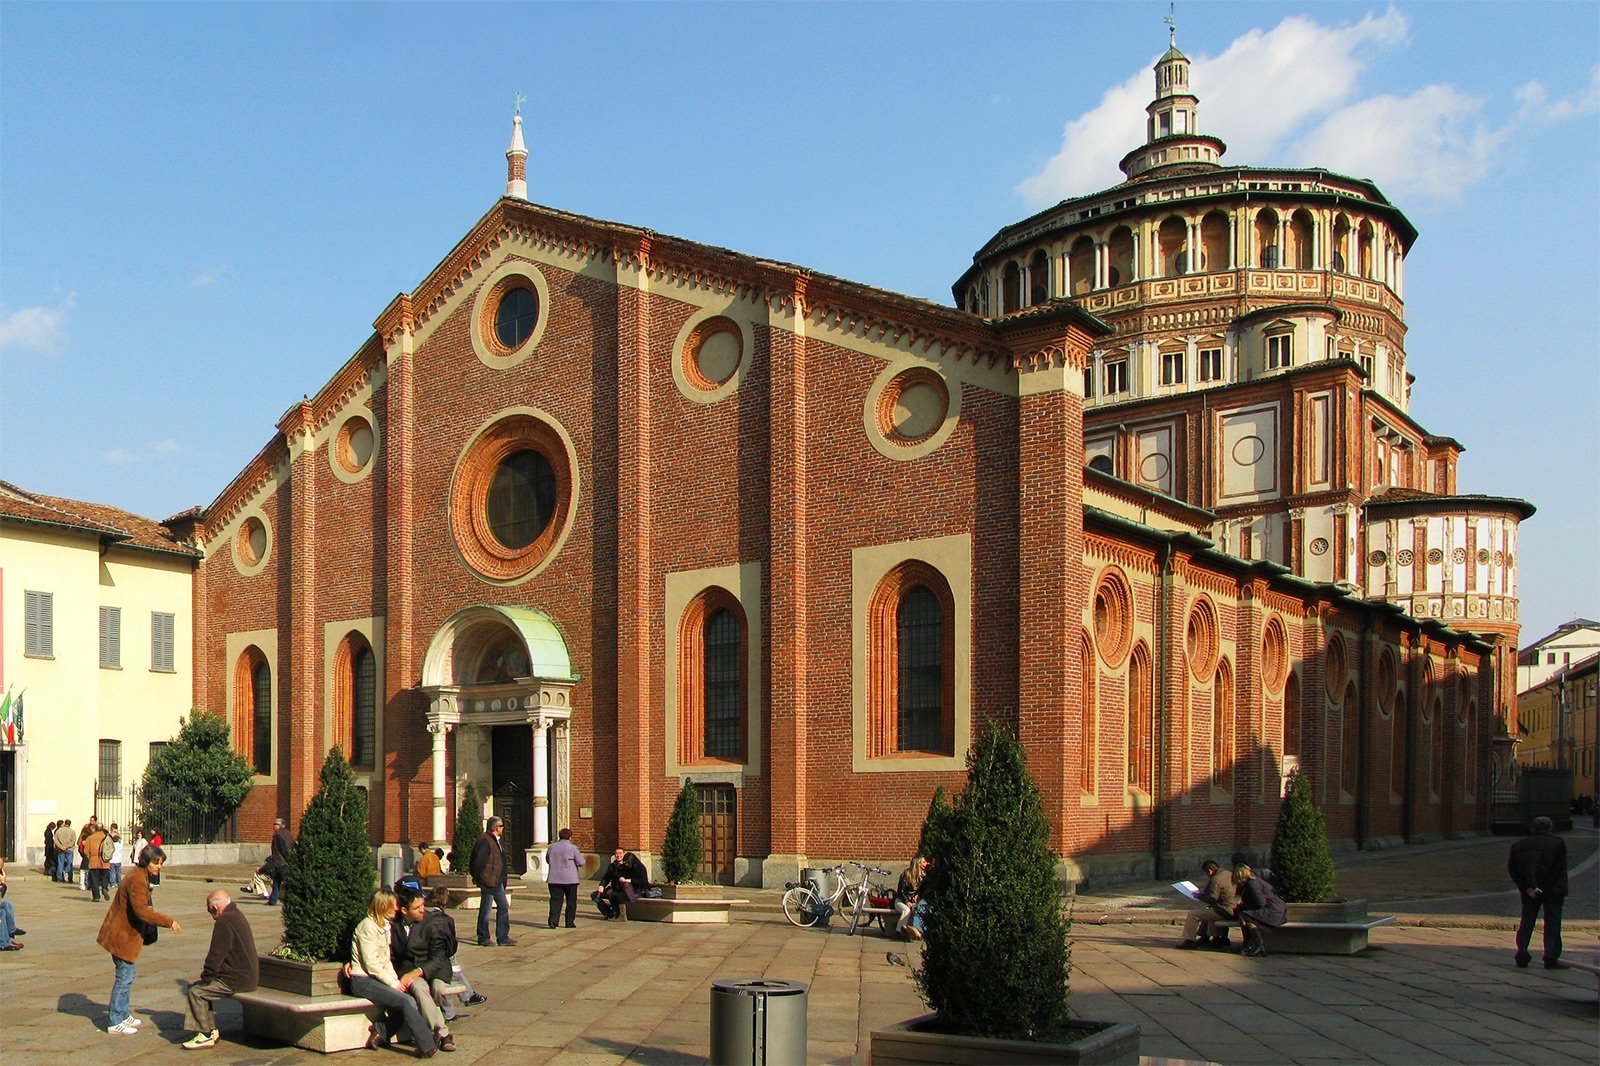 Church of Santa Maria delle Grazie, Milan